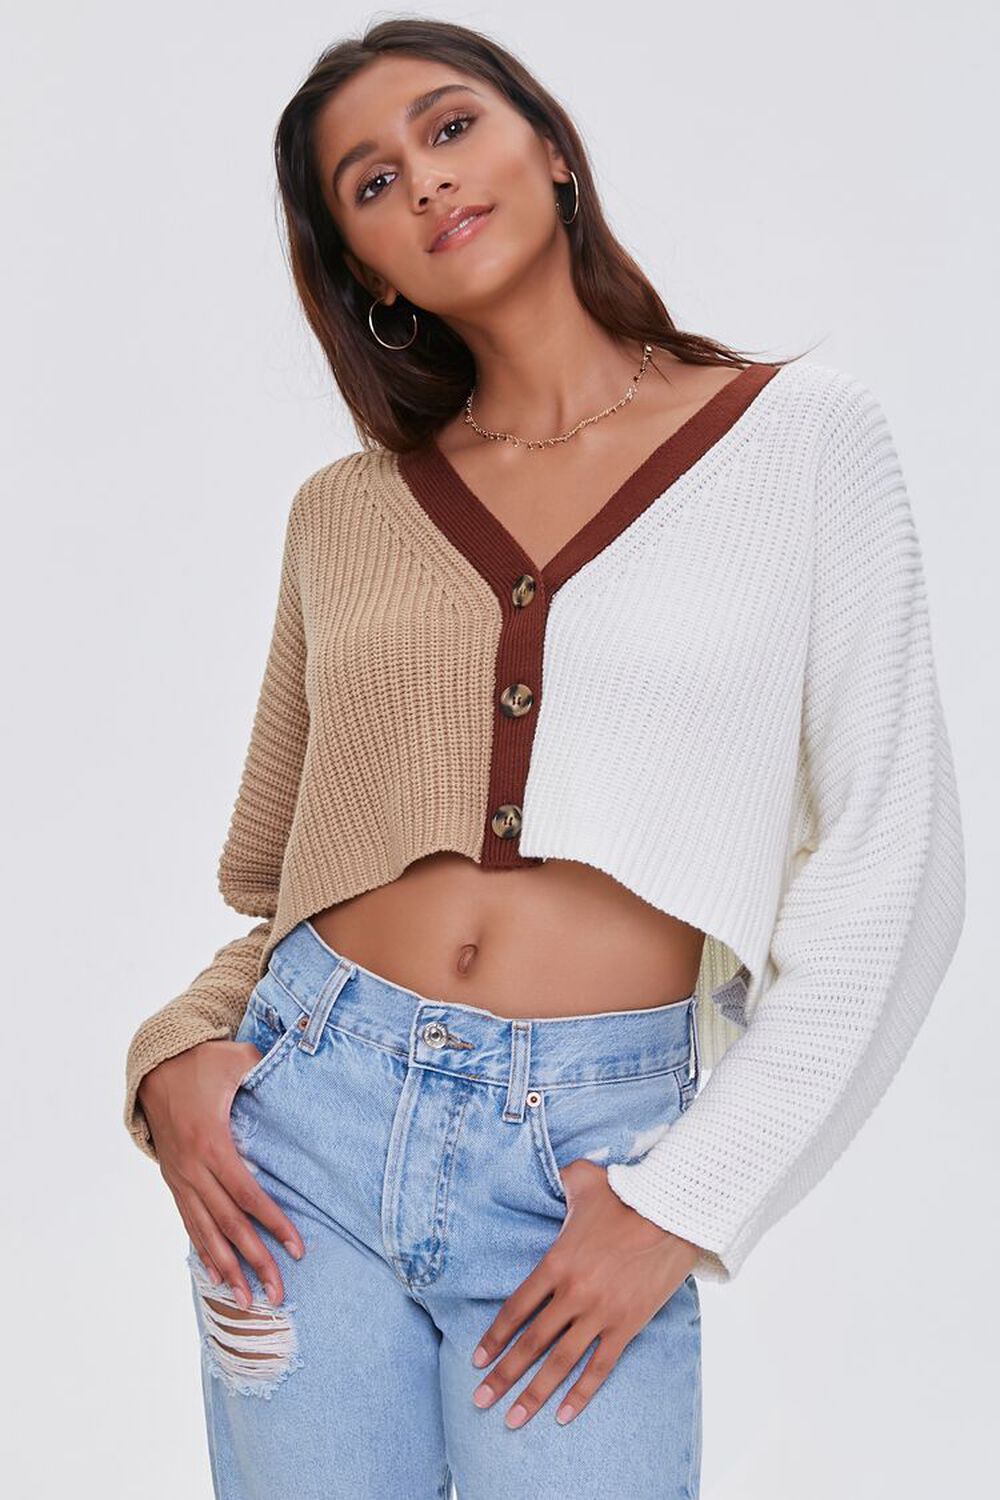 TAUPE/MULTI Cropped Colorblock Cardigan Sweater, image 1